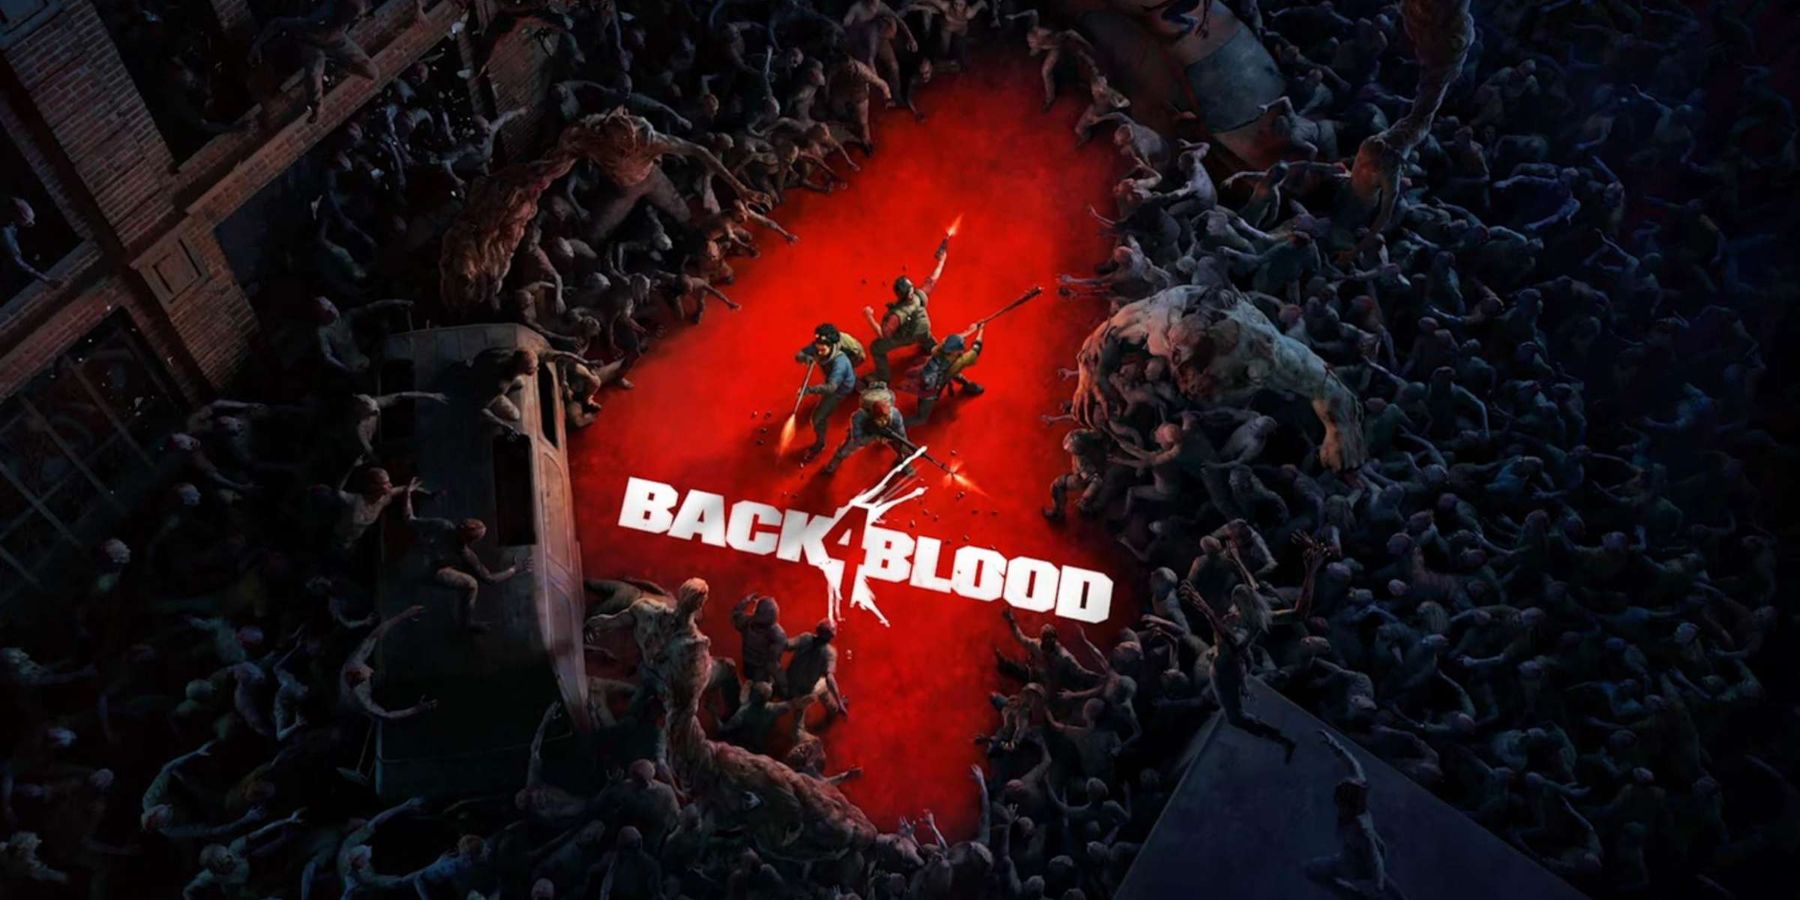 New job listing hints at Back 4 Blood sequel